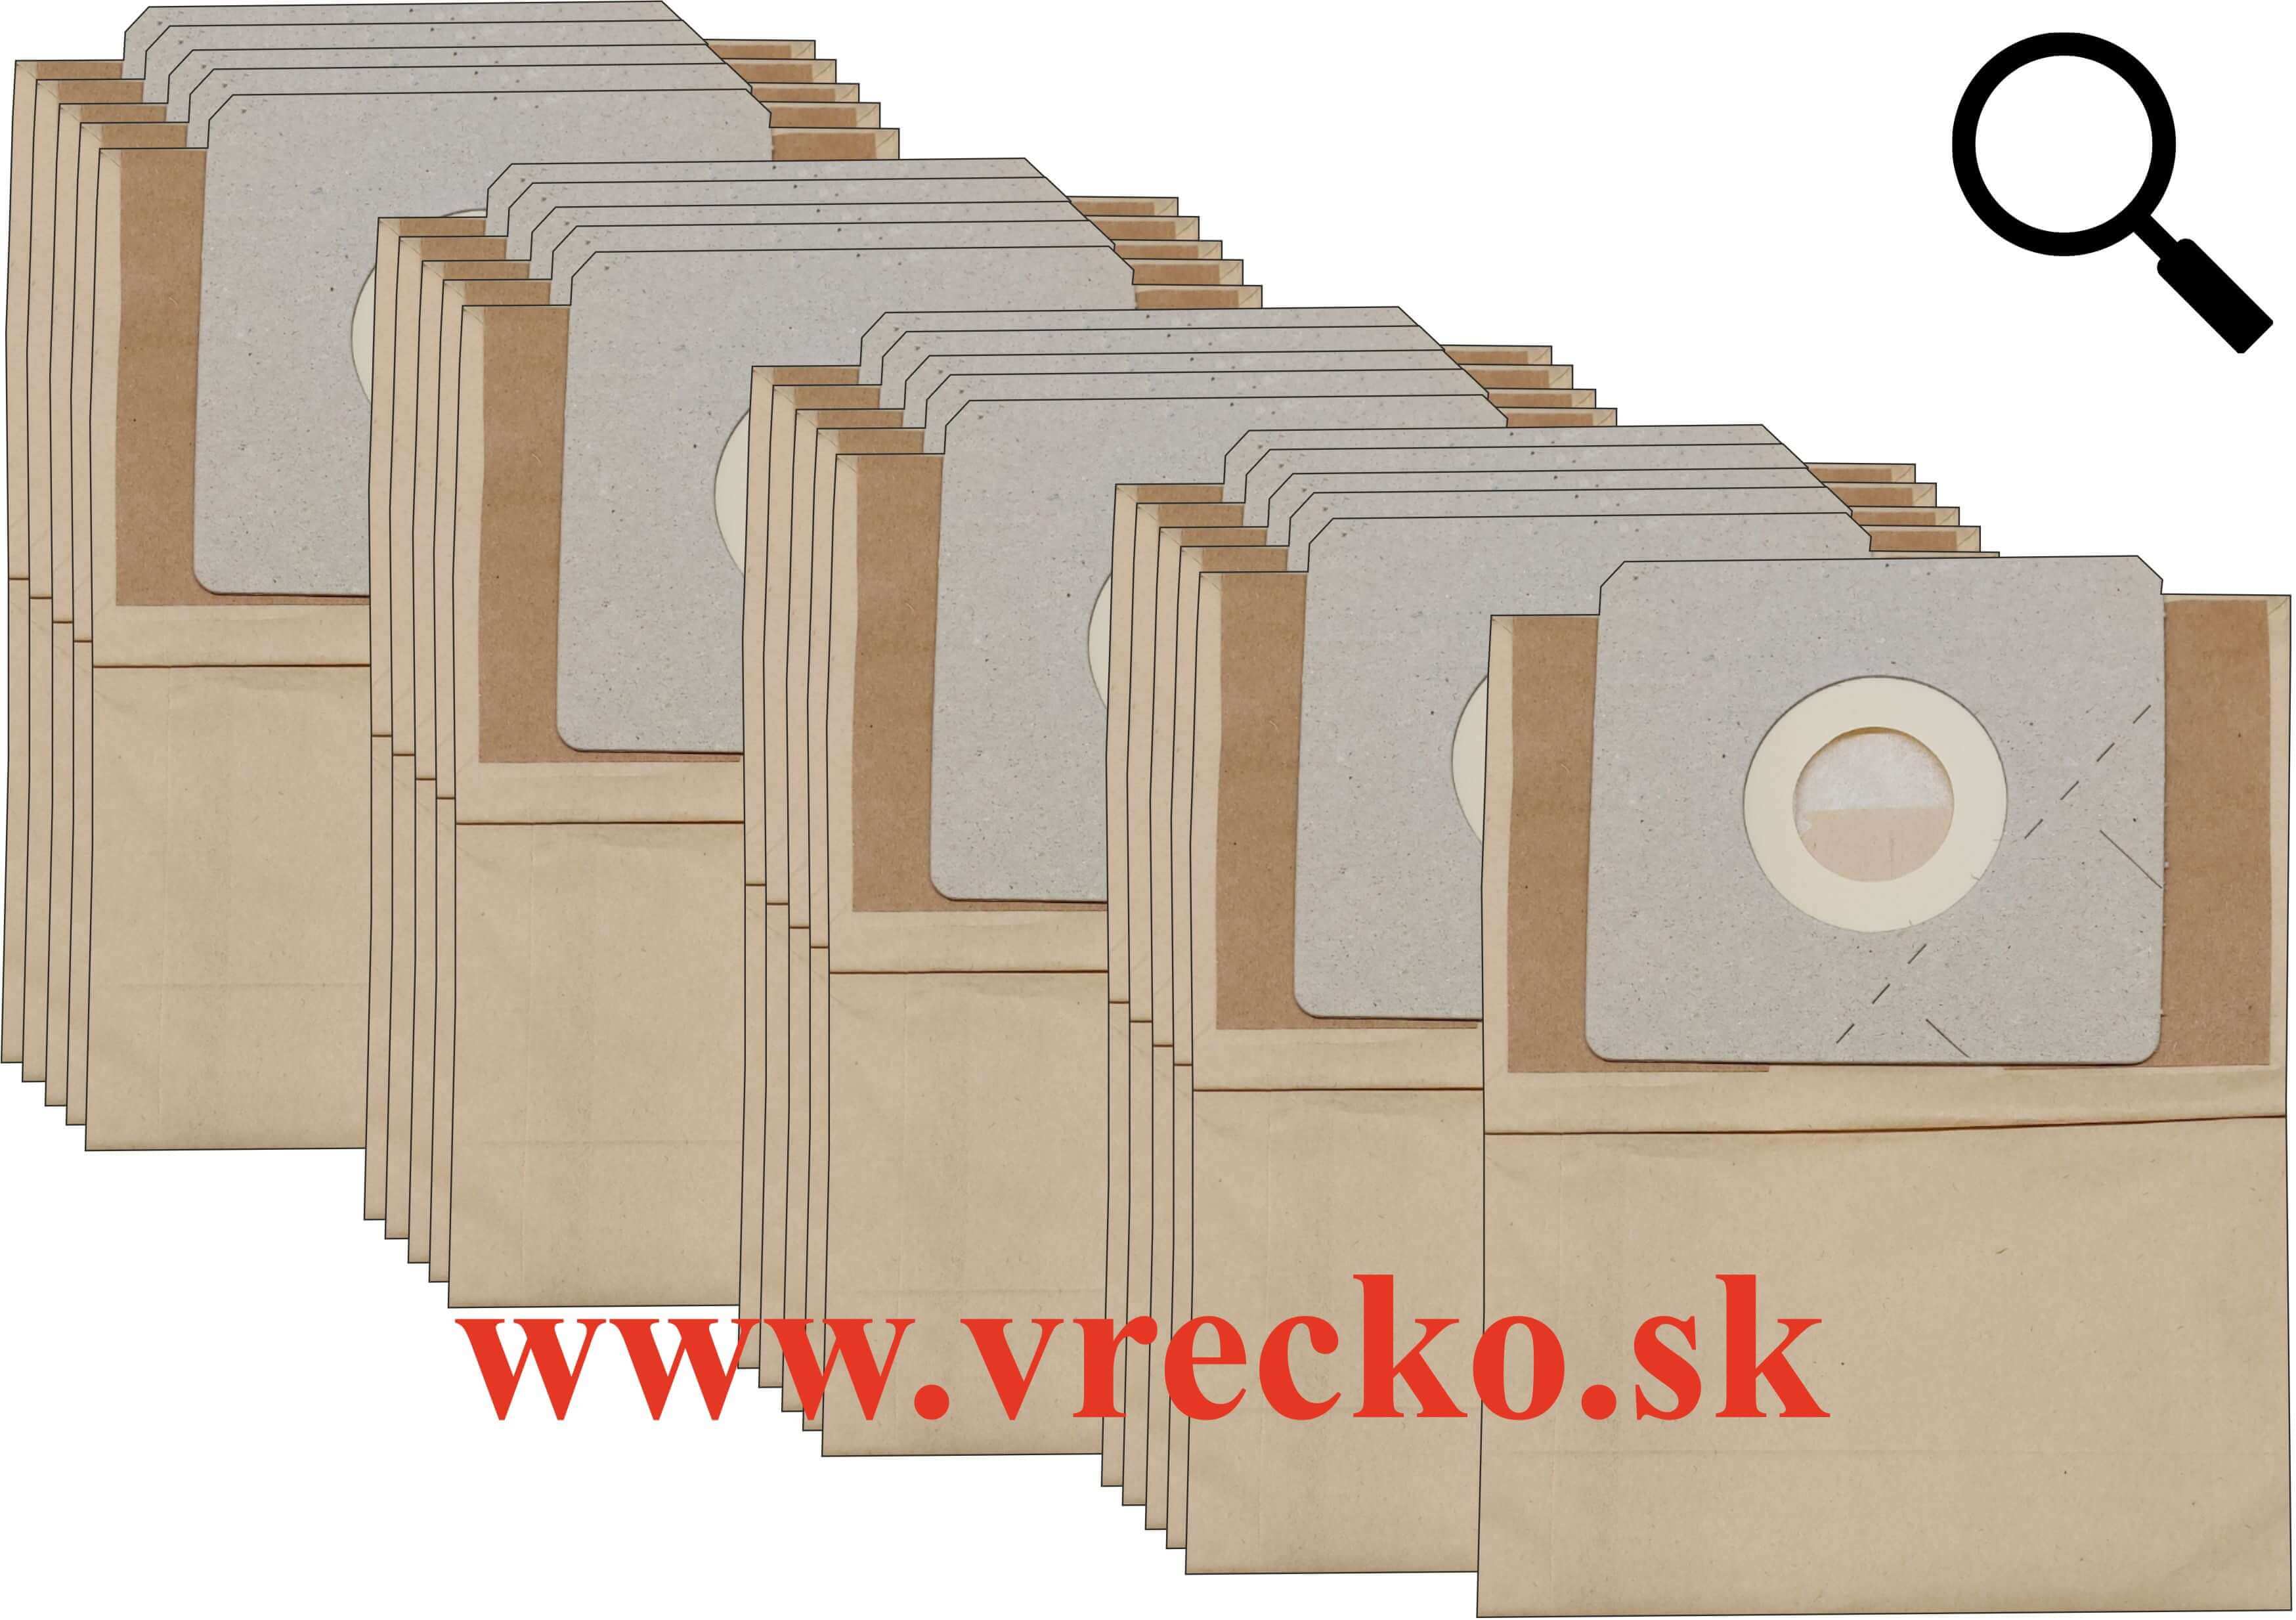 Progress PC 3700-3801 - zvhodnen balenie typ L - papierov vreck do vysvaa s dopravou zdarma (20ks)